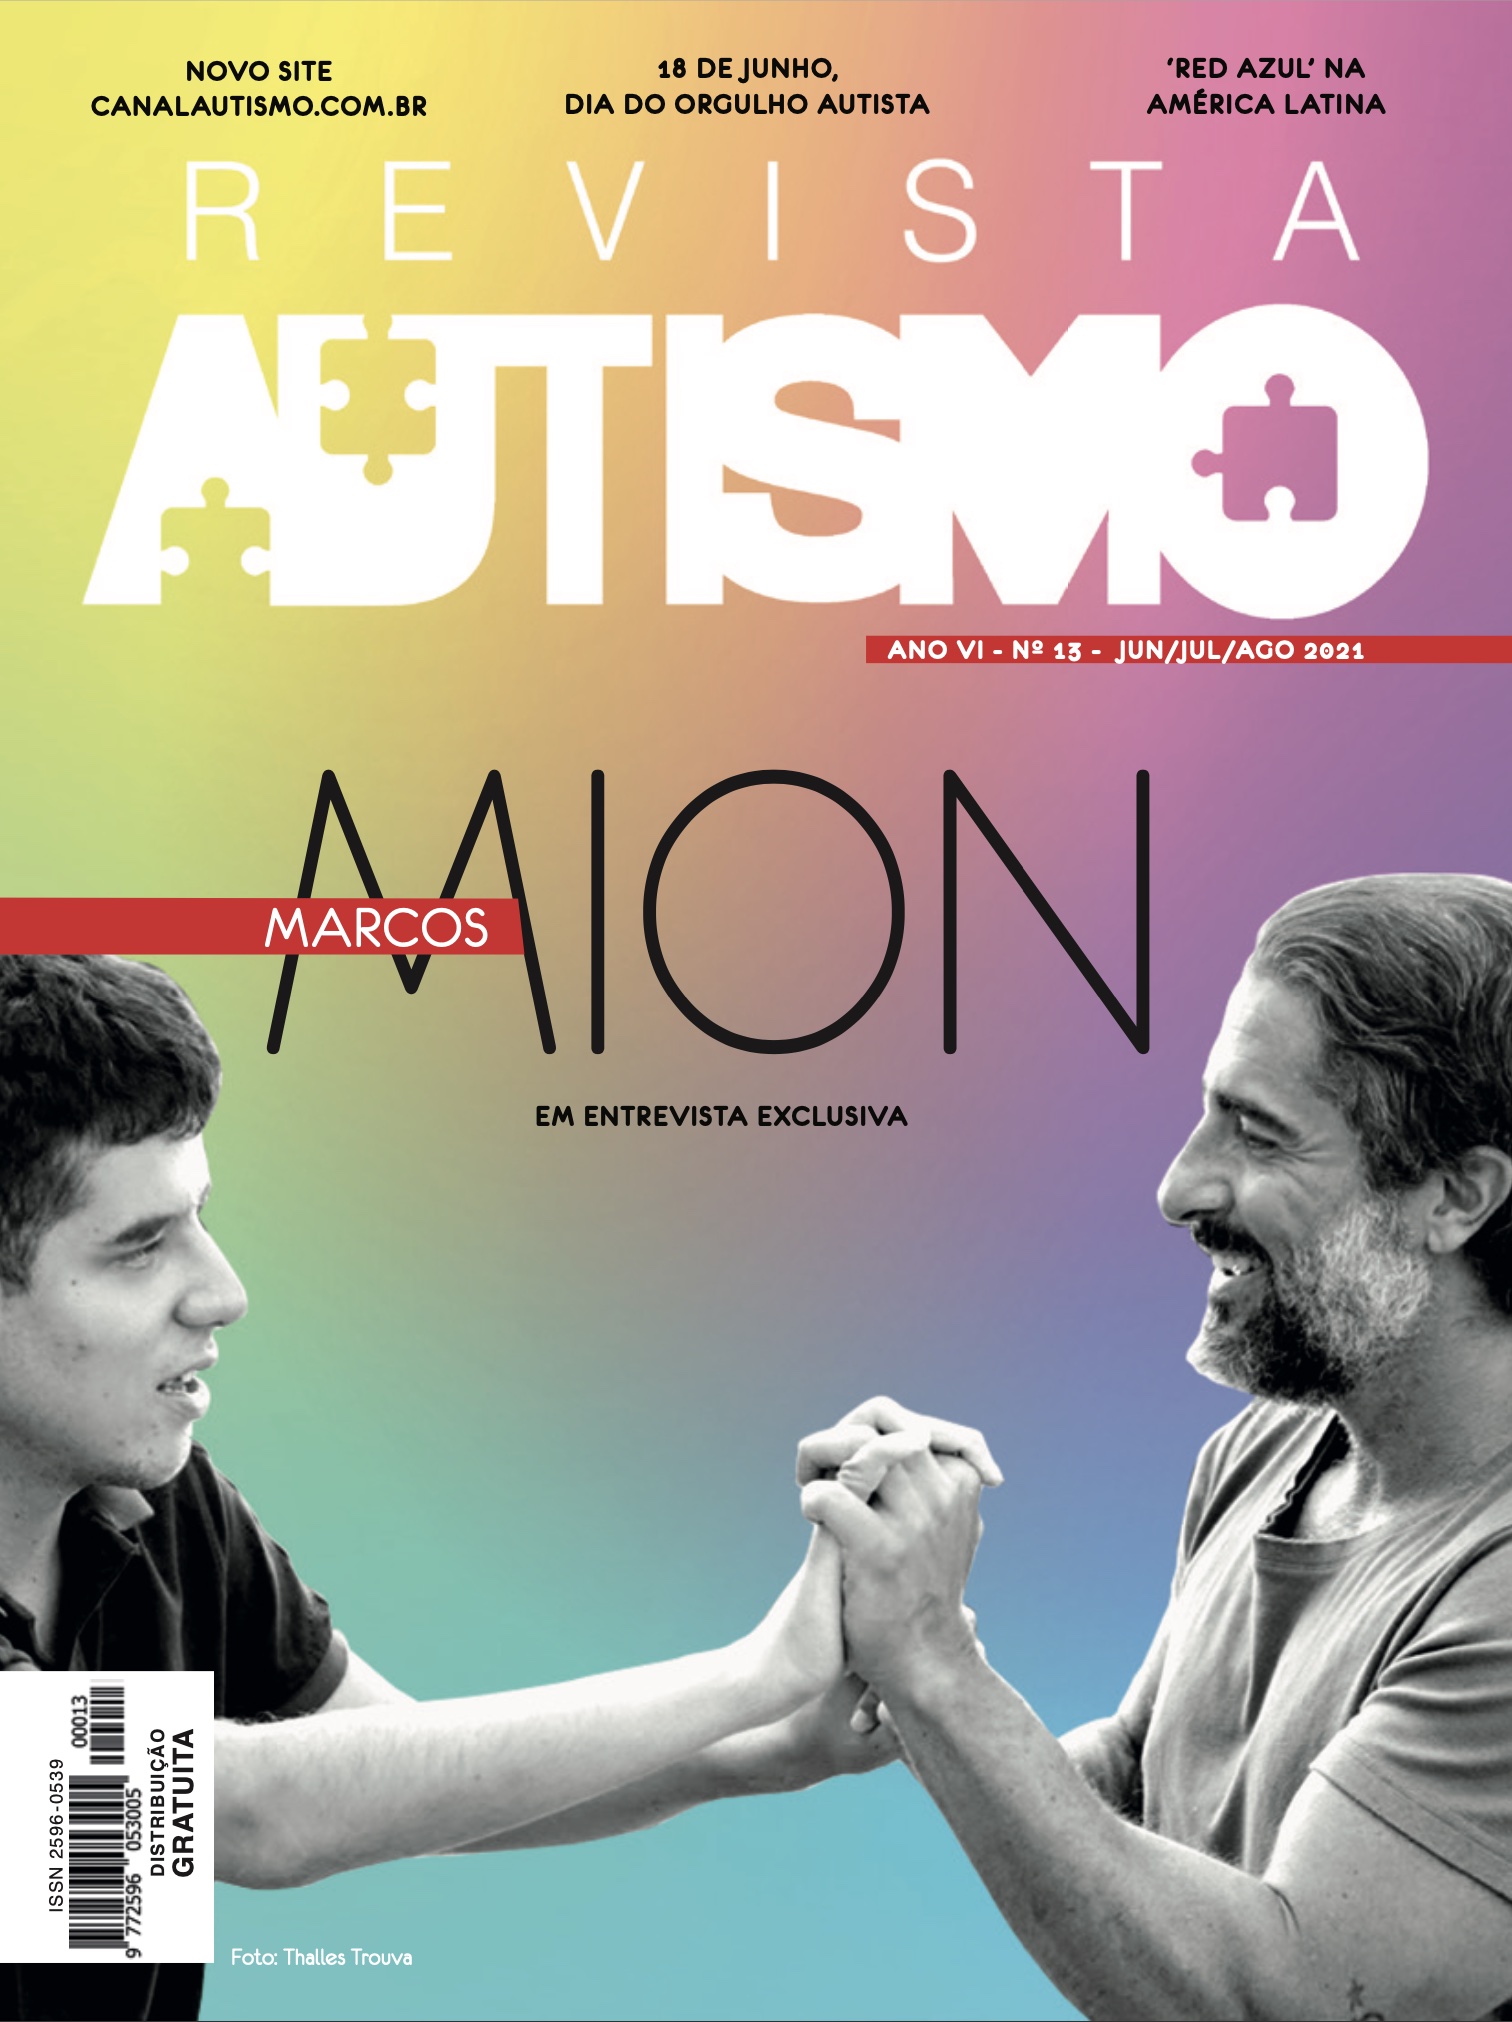 Revista Autismo nº 13 - Entrevista Exclusiva com Marcos Mion — Canal Autismo